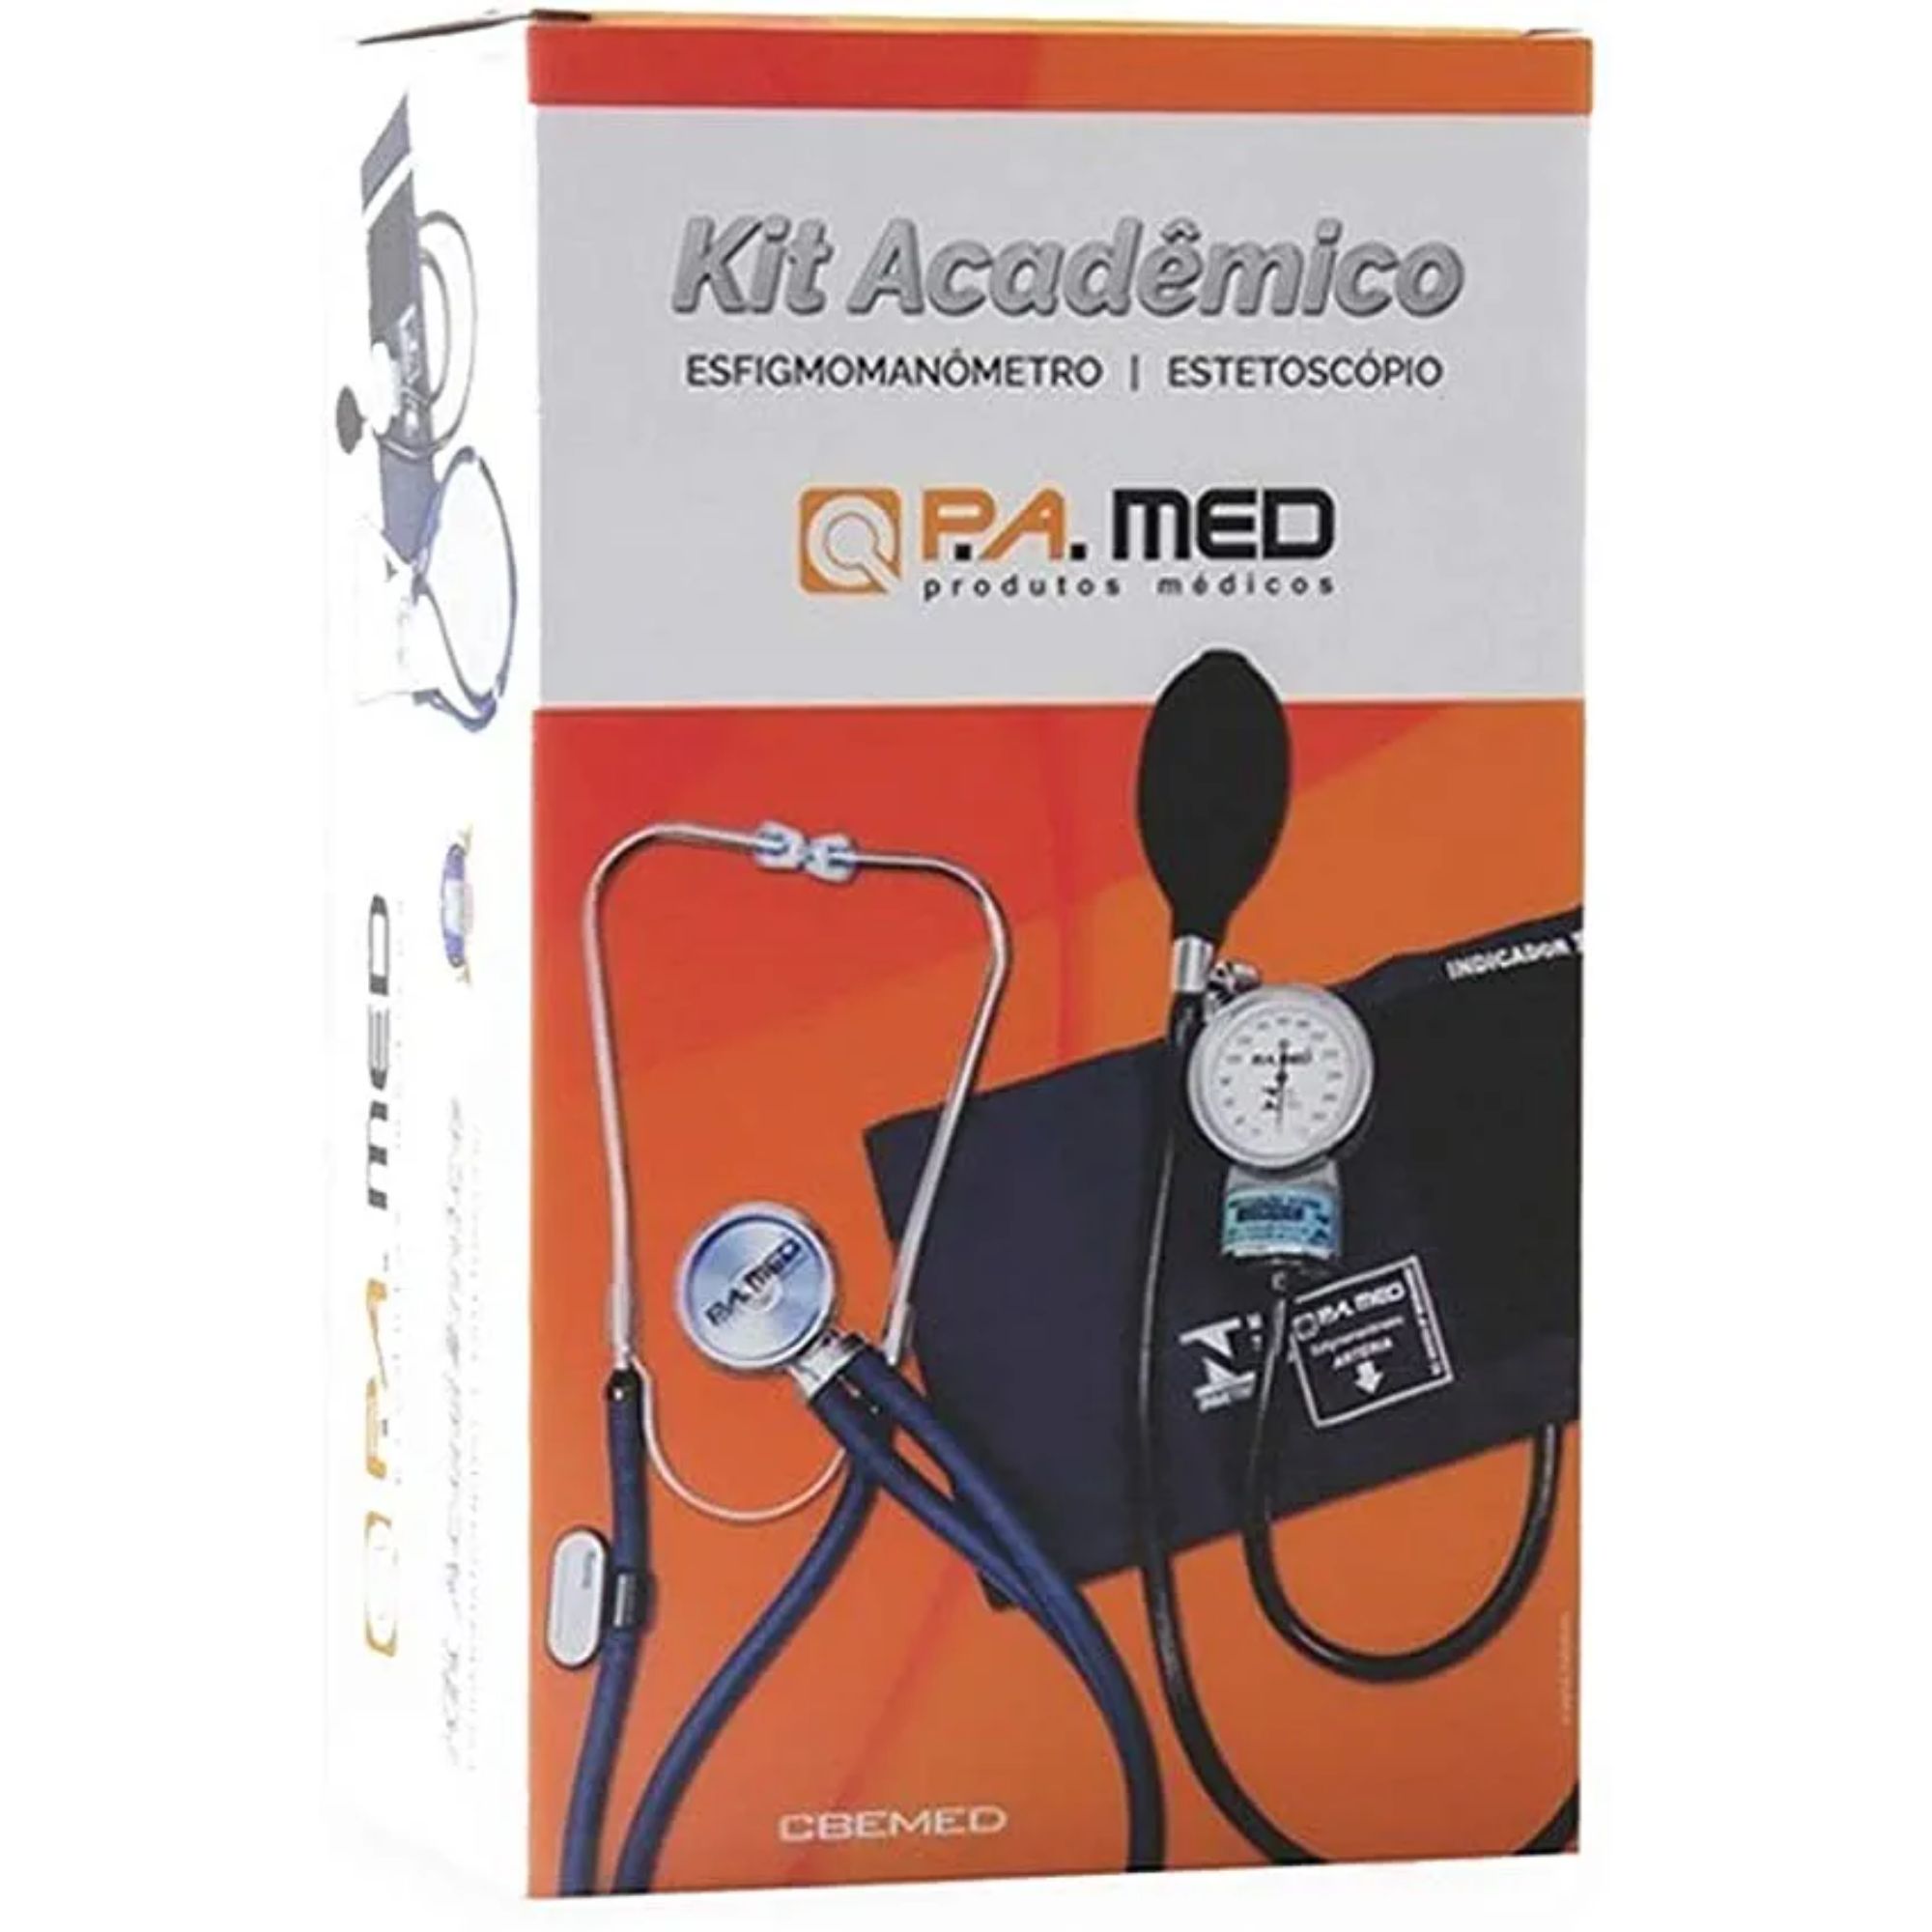 Kit Acadêmico P.A MED Esfigmomanômetro + Estetoscópio